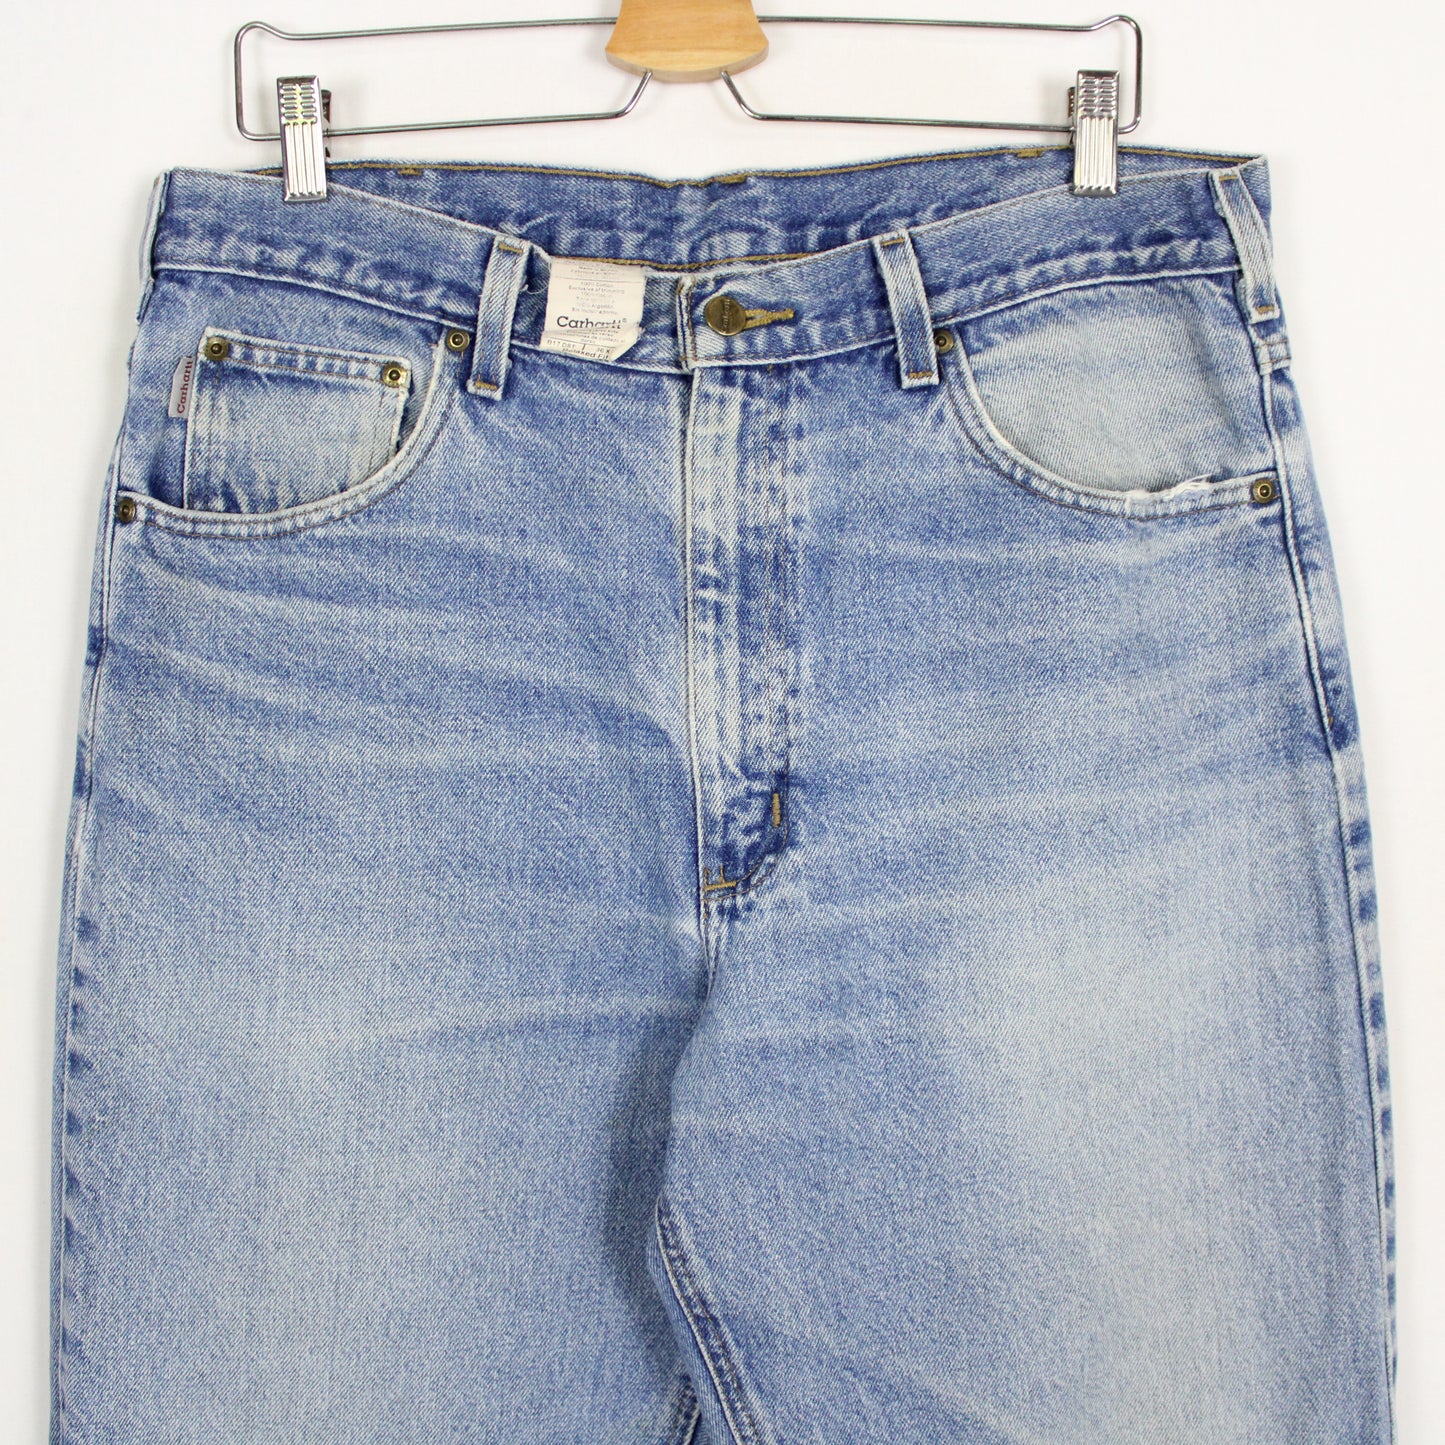 Vintage Carhartt Carpenter Jeans - 36x32